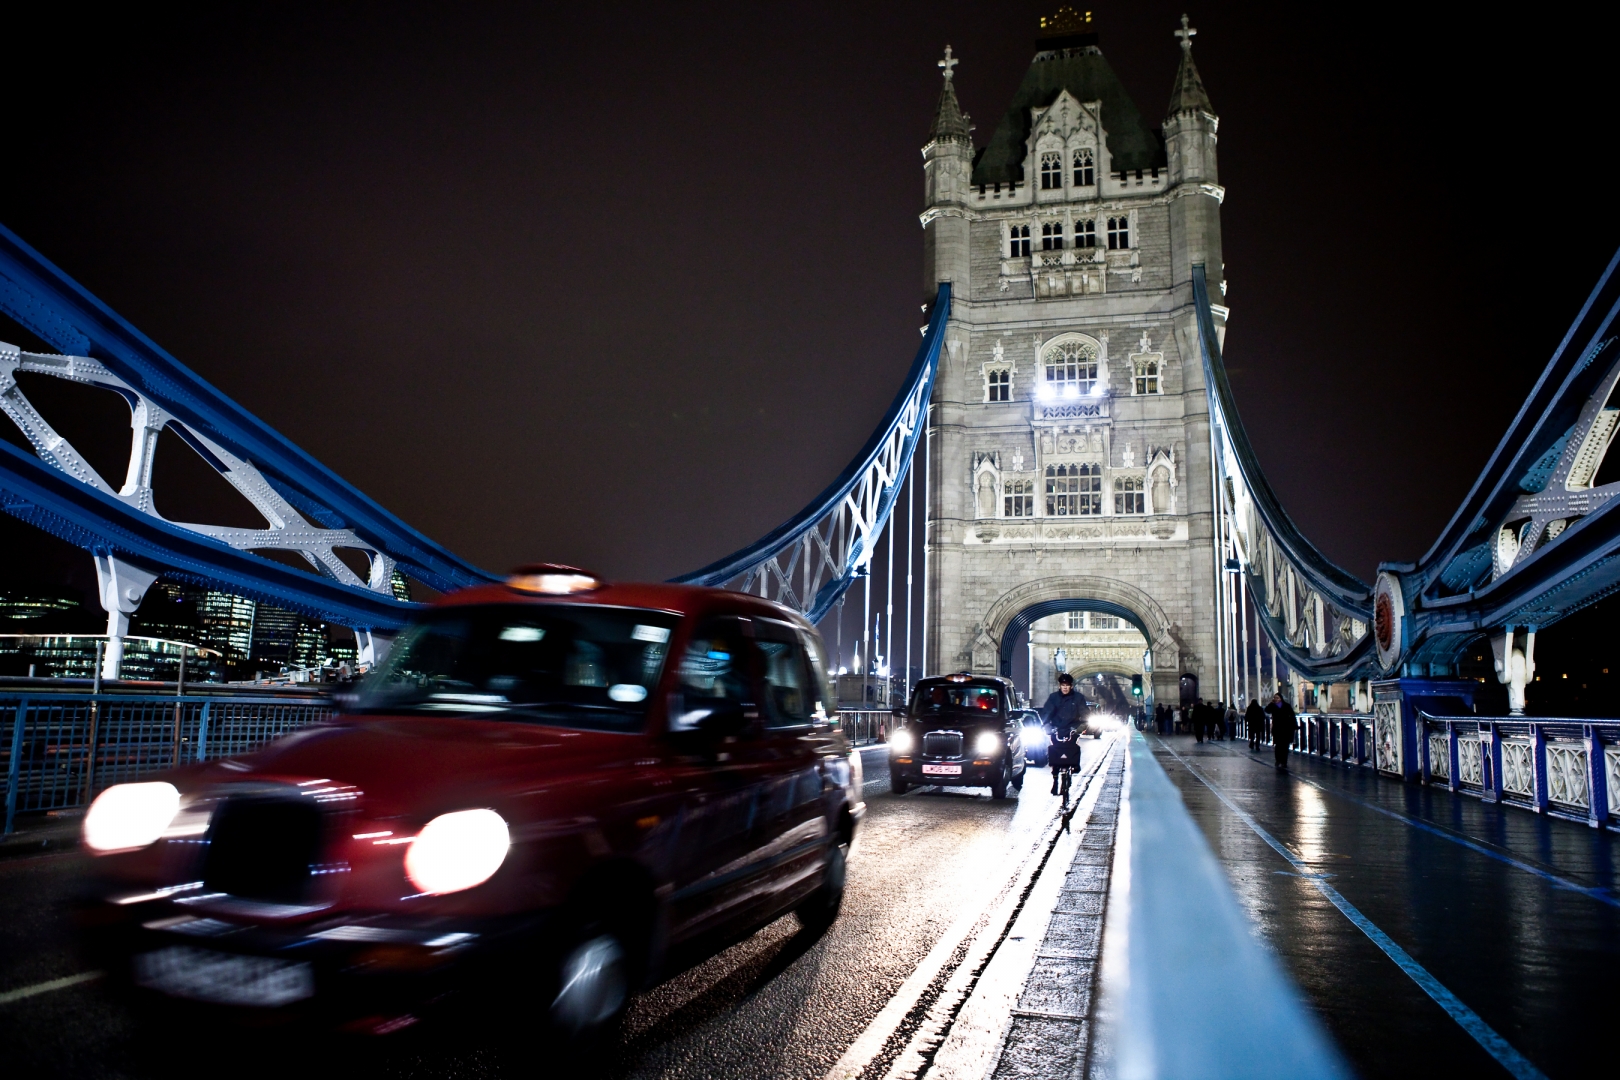 Дороги лондона. Авто Тауэрский мост Лондон. Чигвелл Лондон. Тауэрский мост внутри башен. Машины на Тауэрском мосту.